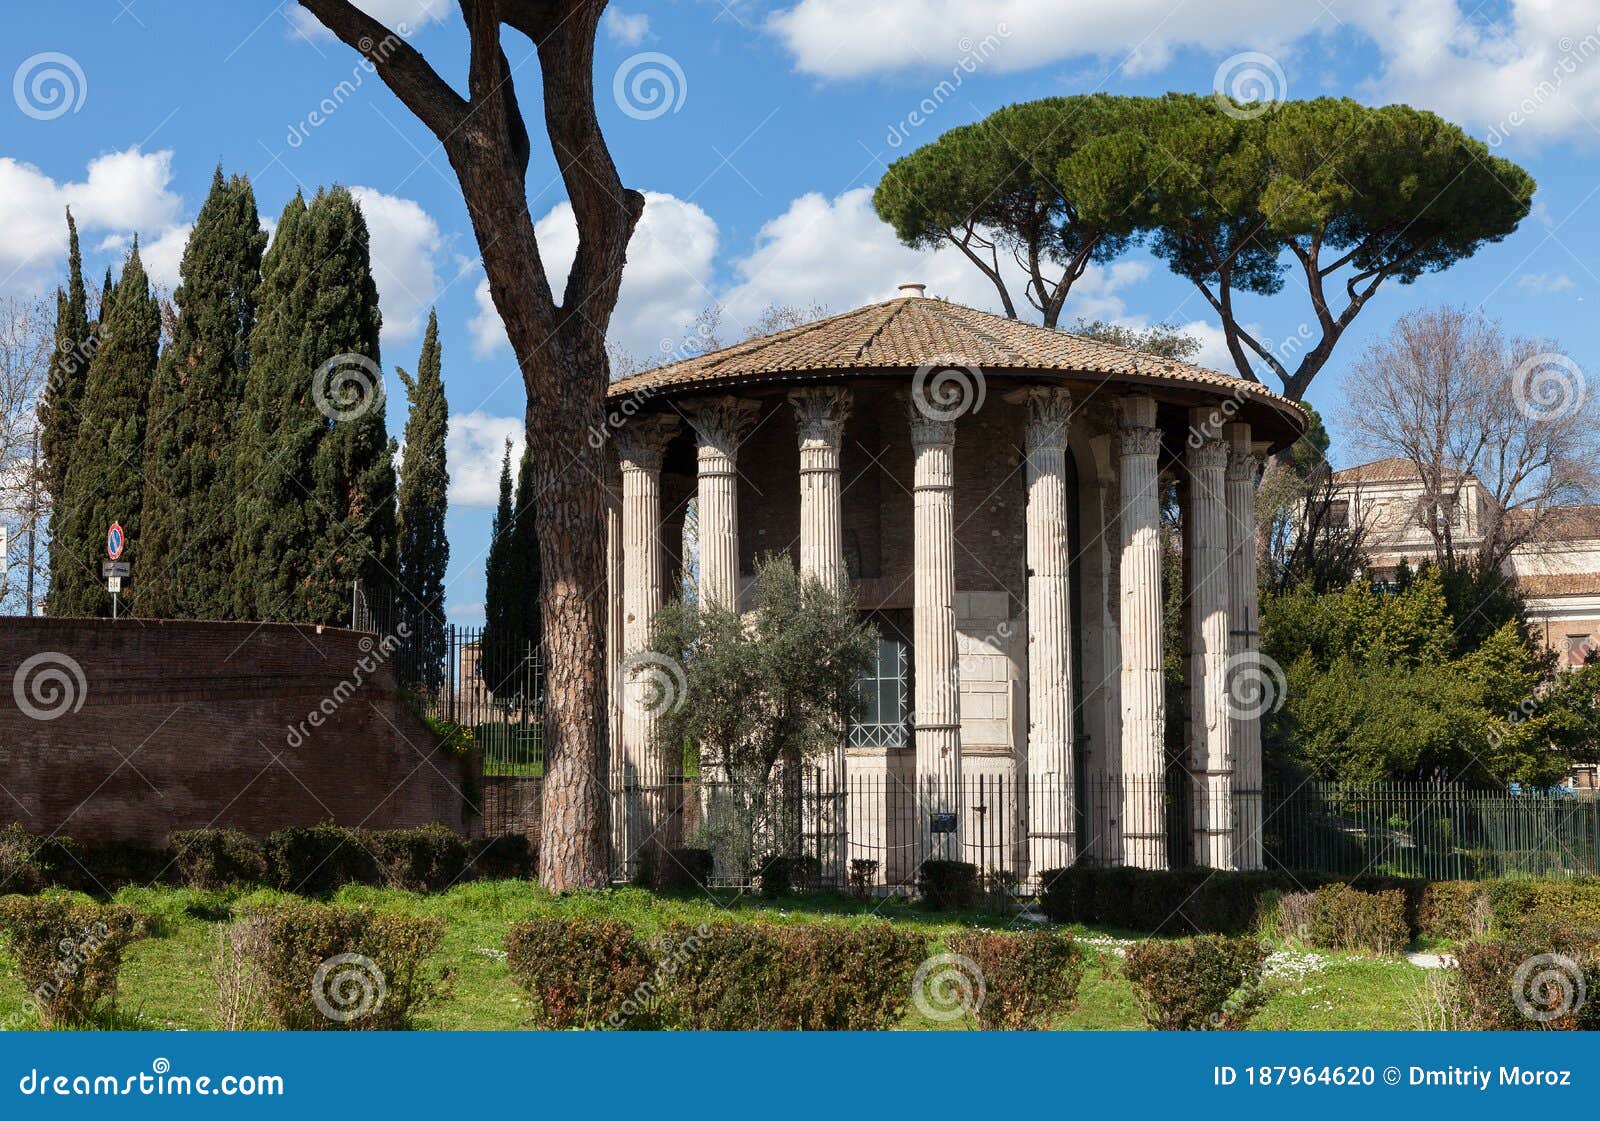 the temple of hercules victor hercules the winner tempio di ercole vincitore or hercules olivarius. roman round temple in piaz